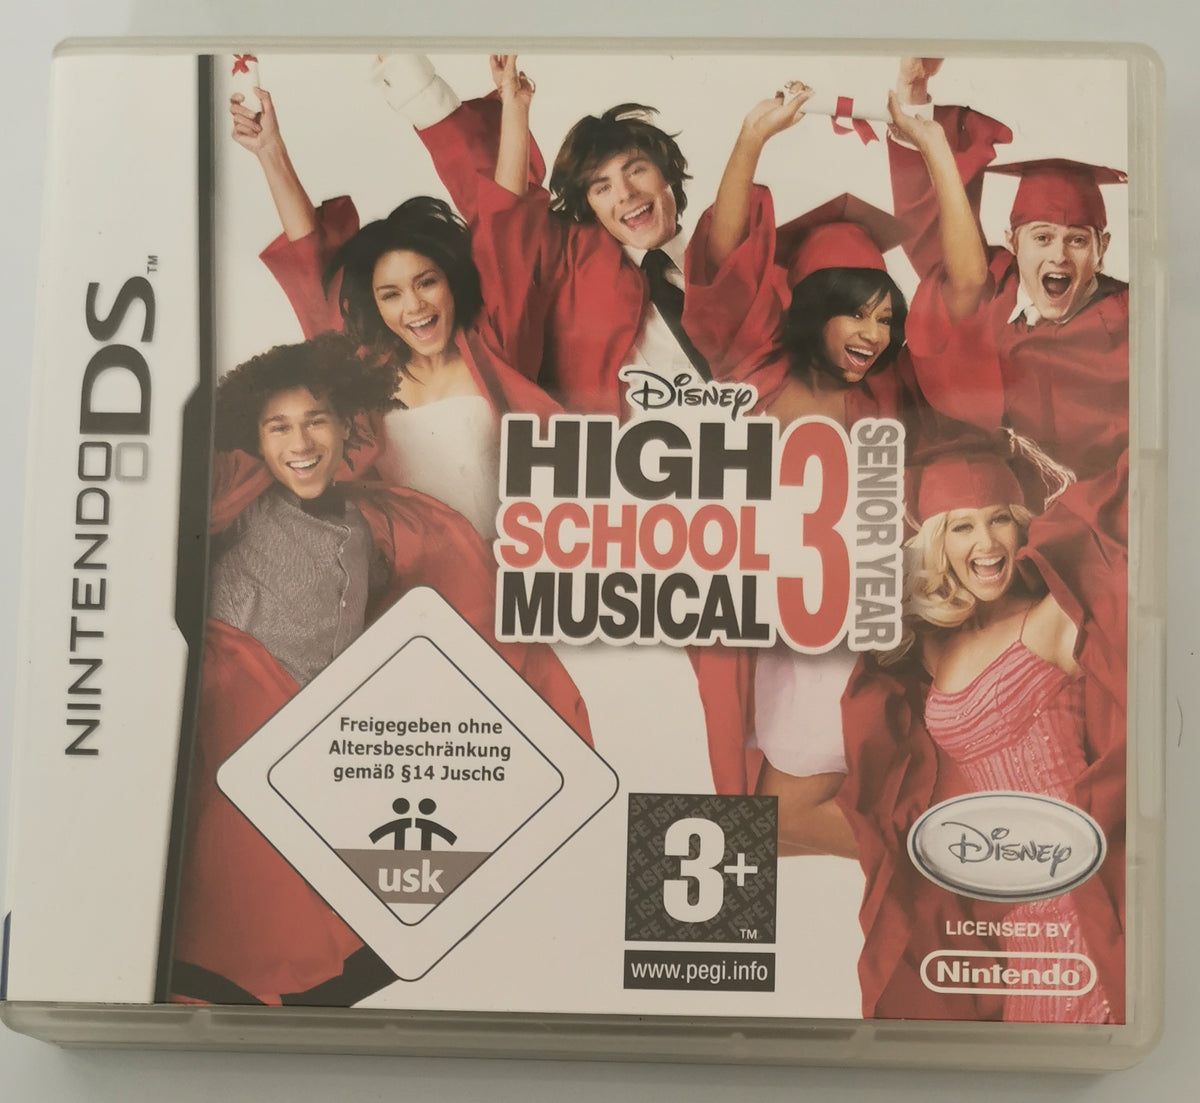 High School Musical 3 Senior Year NDS (Nintendo DS) [Sehr Gut]